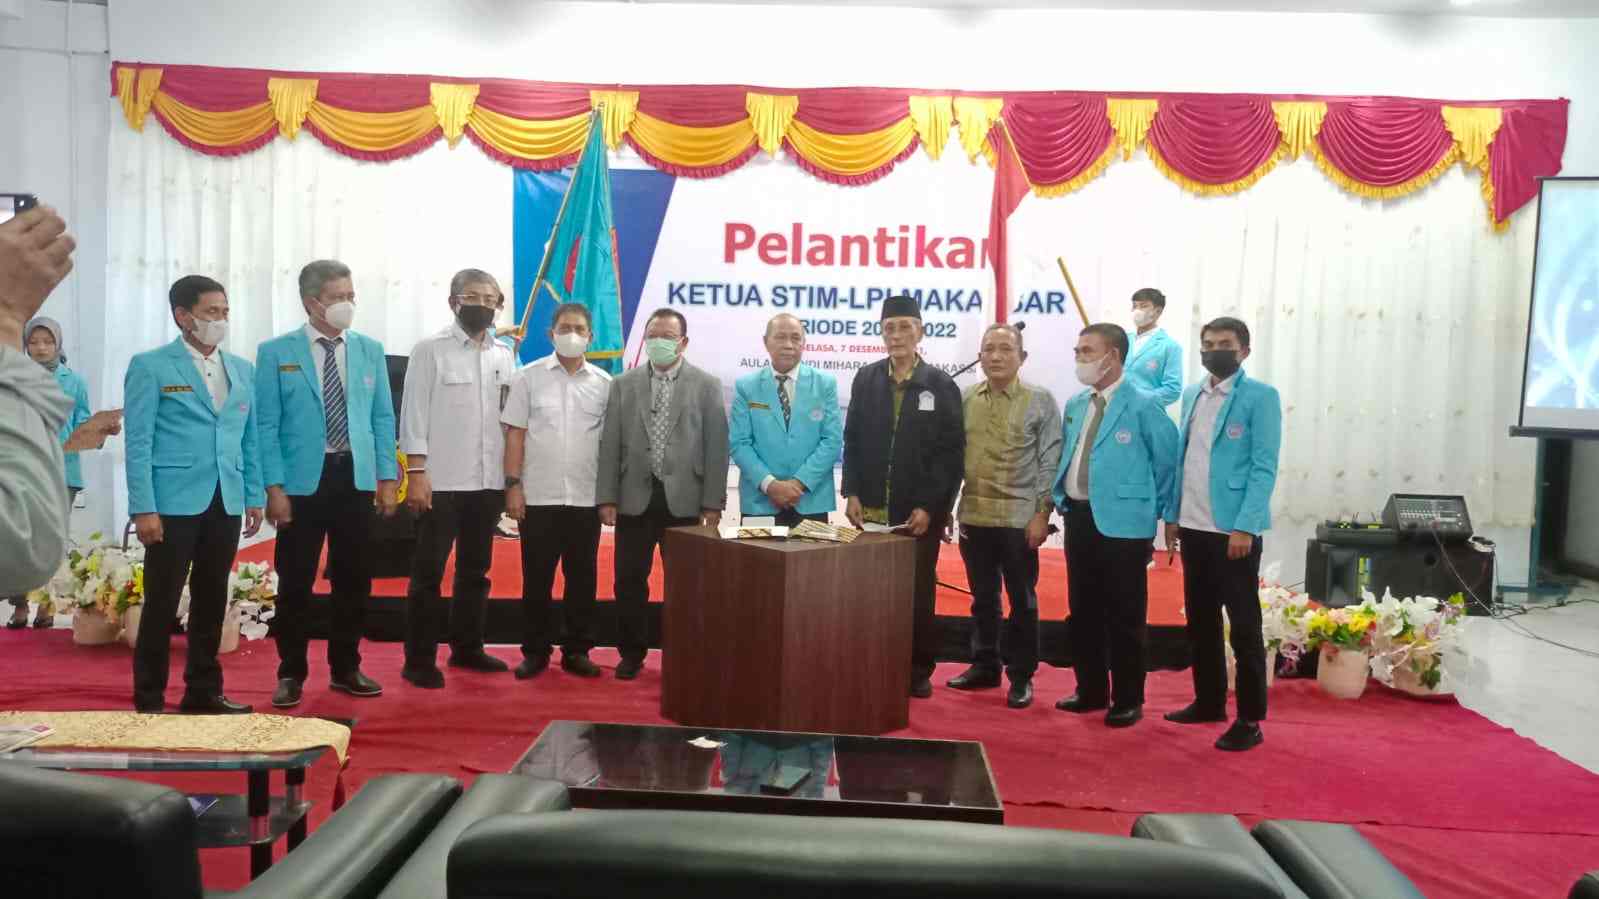 Pelantikan Ketua STIM LPI Makassar Periode 2021-2022